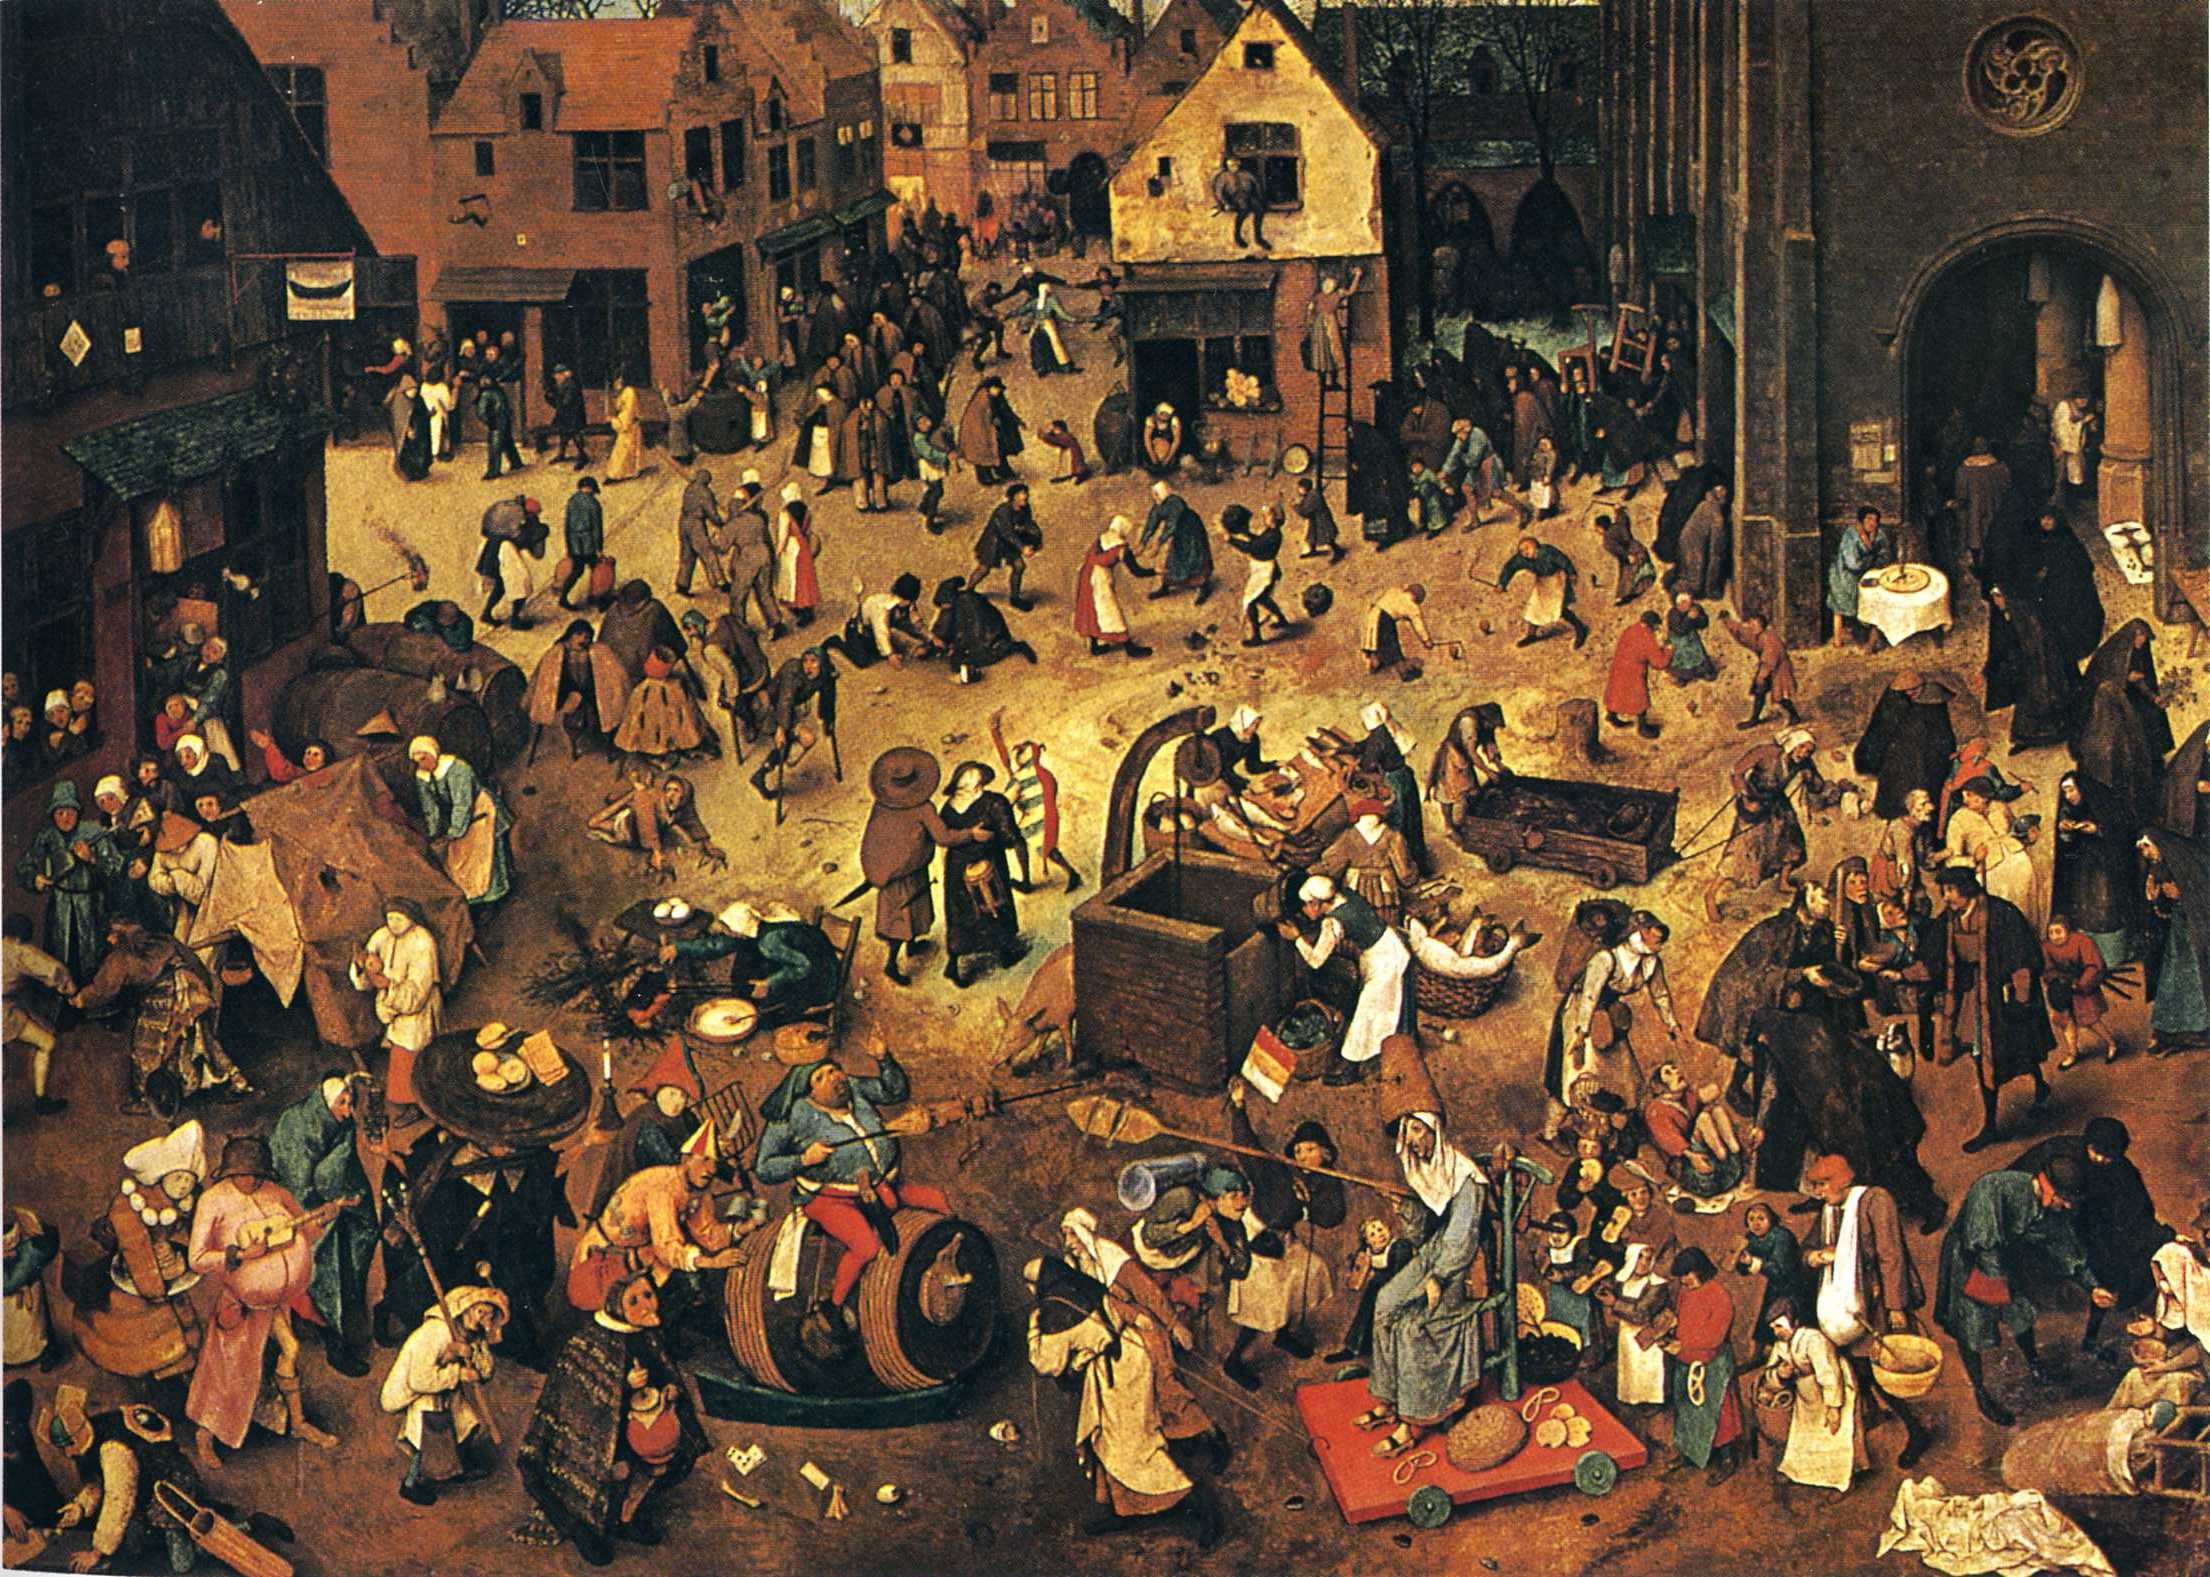 The Fight Between Carnival and Lent by Pieter Bruegel the Elder - 1559 - 118 x 164.5 cm Kunsthistorisches Museum